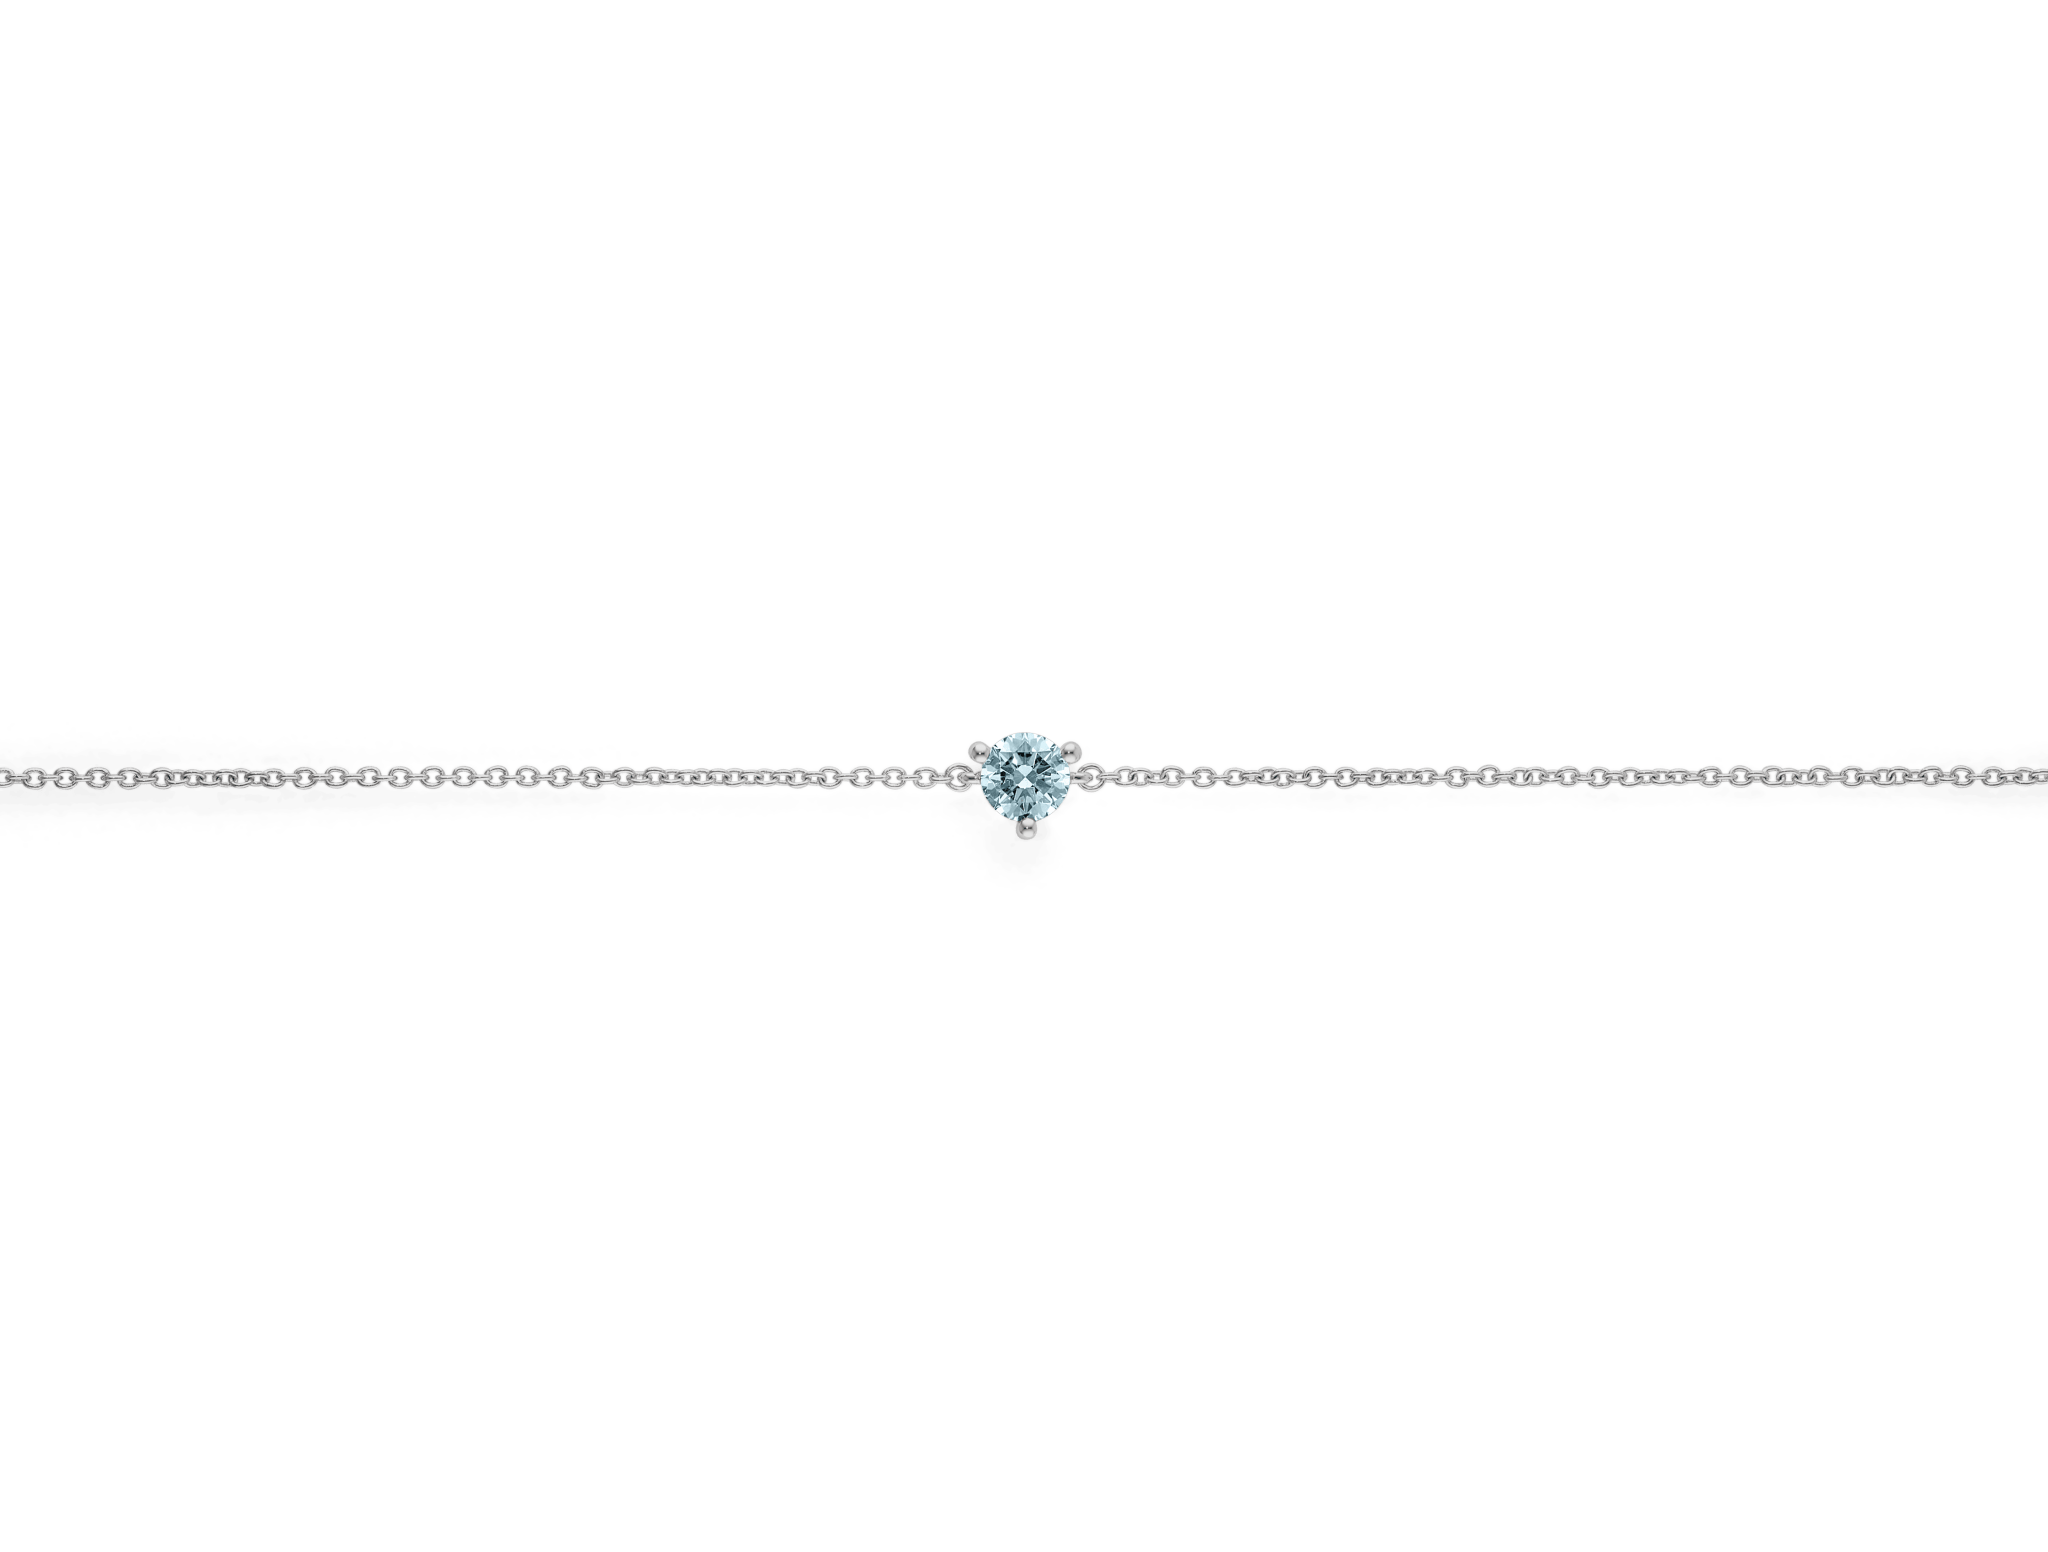 Lab-Grown Diamond ¼ct. Mini Round Brilliant Bracelet | Blue - #Lightbox Jewelry#